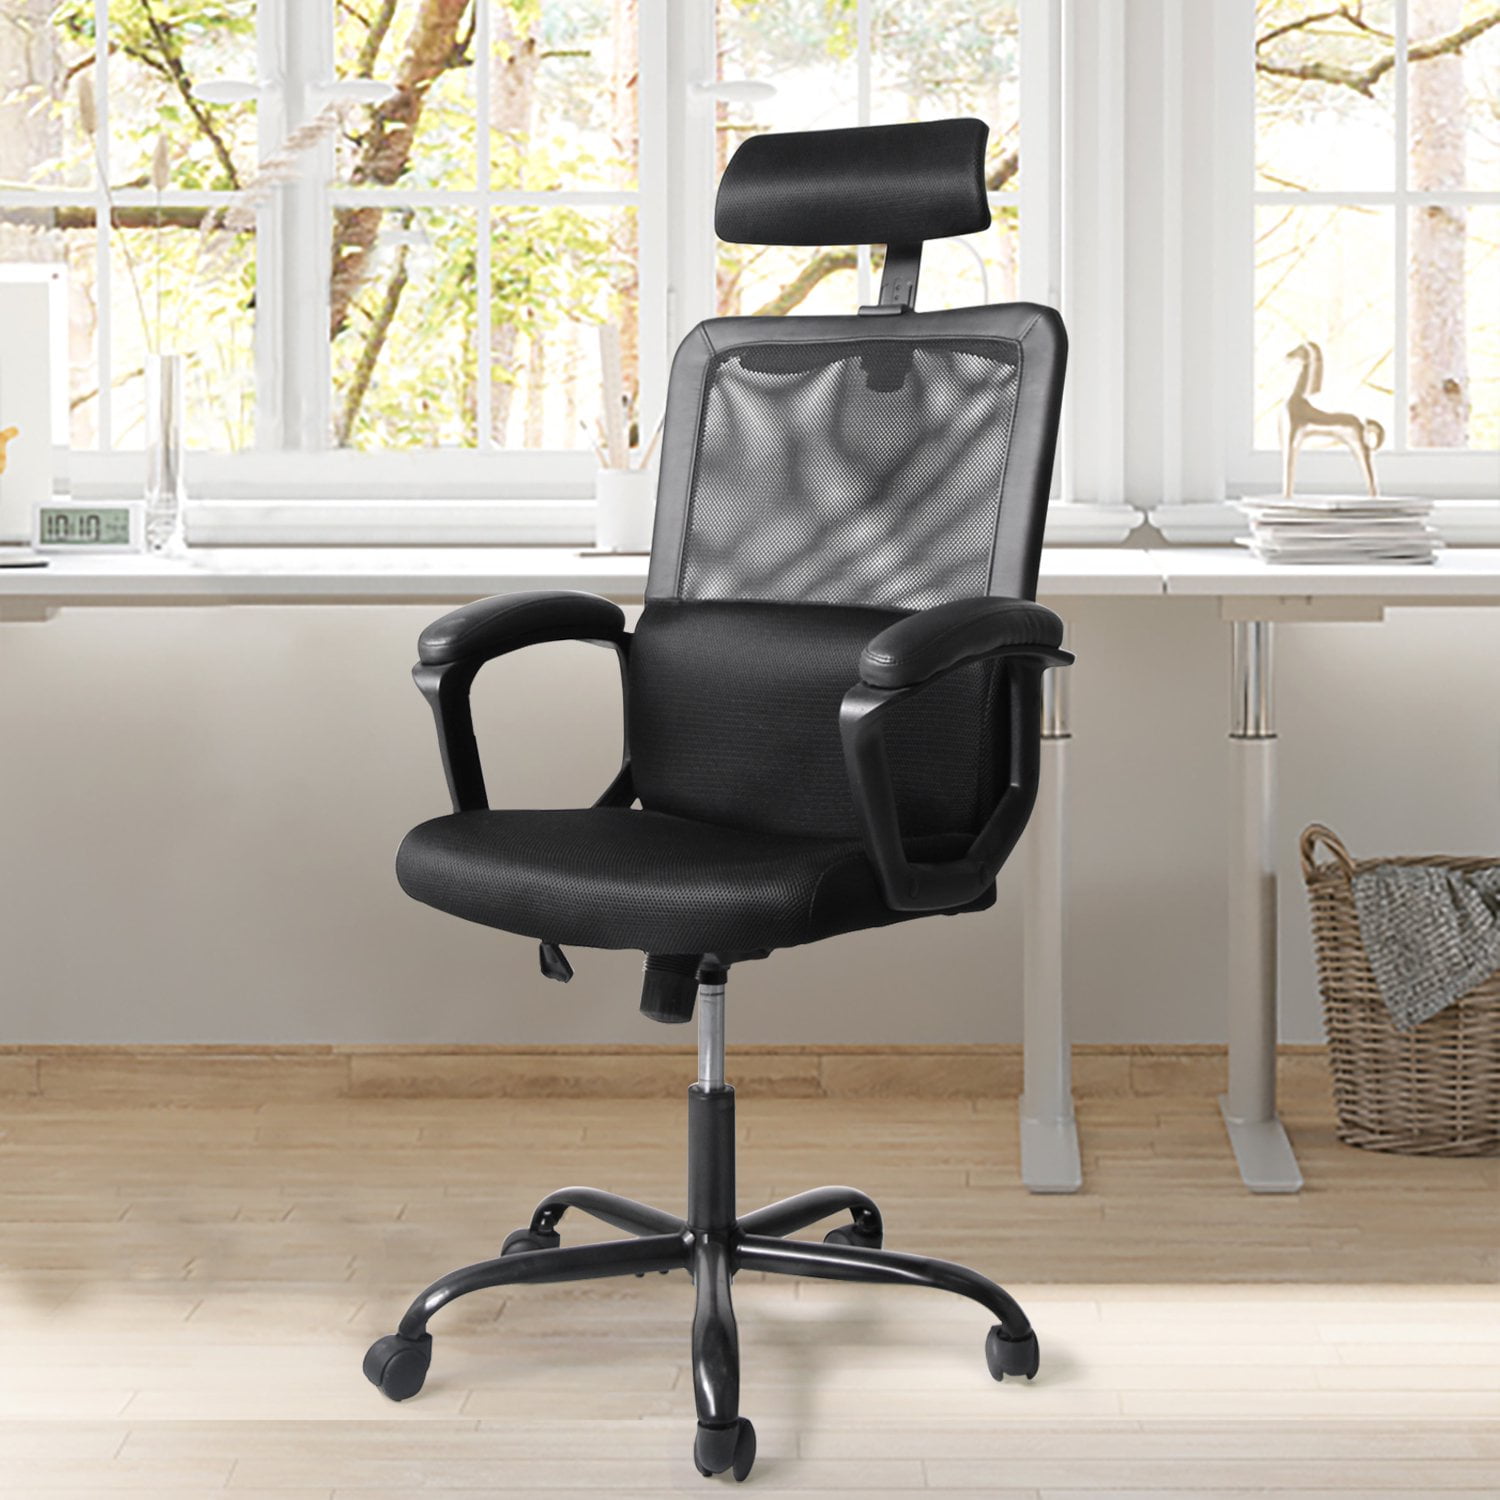 XUER Ergonomic Office Chair, Mesh Computer Desk Chair with